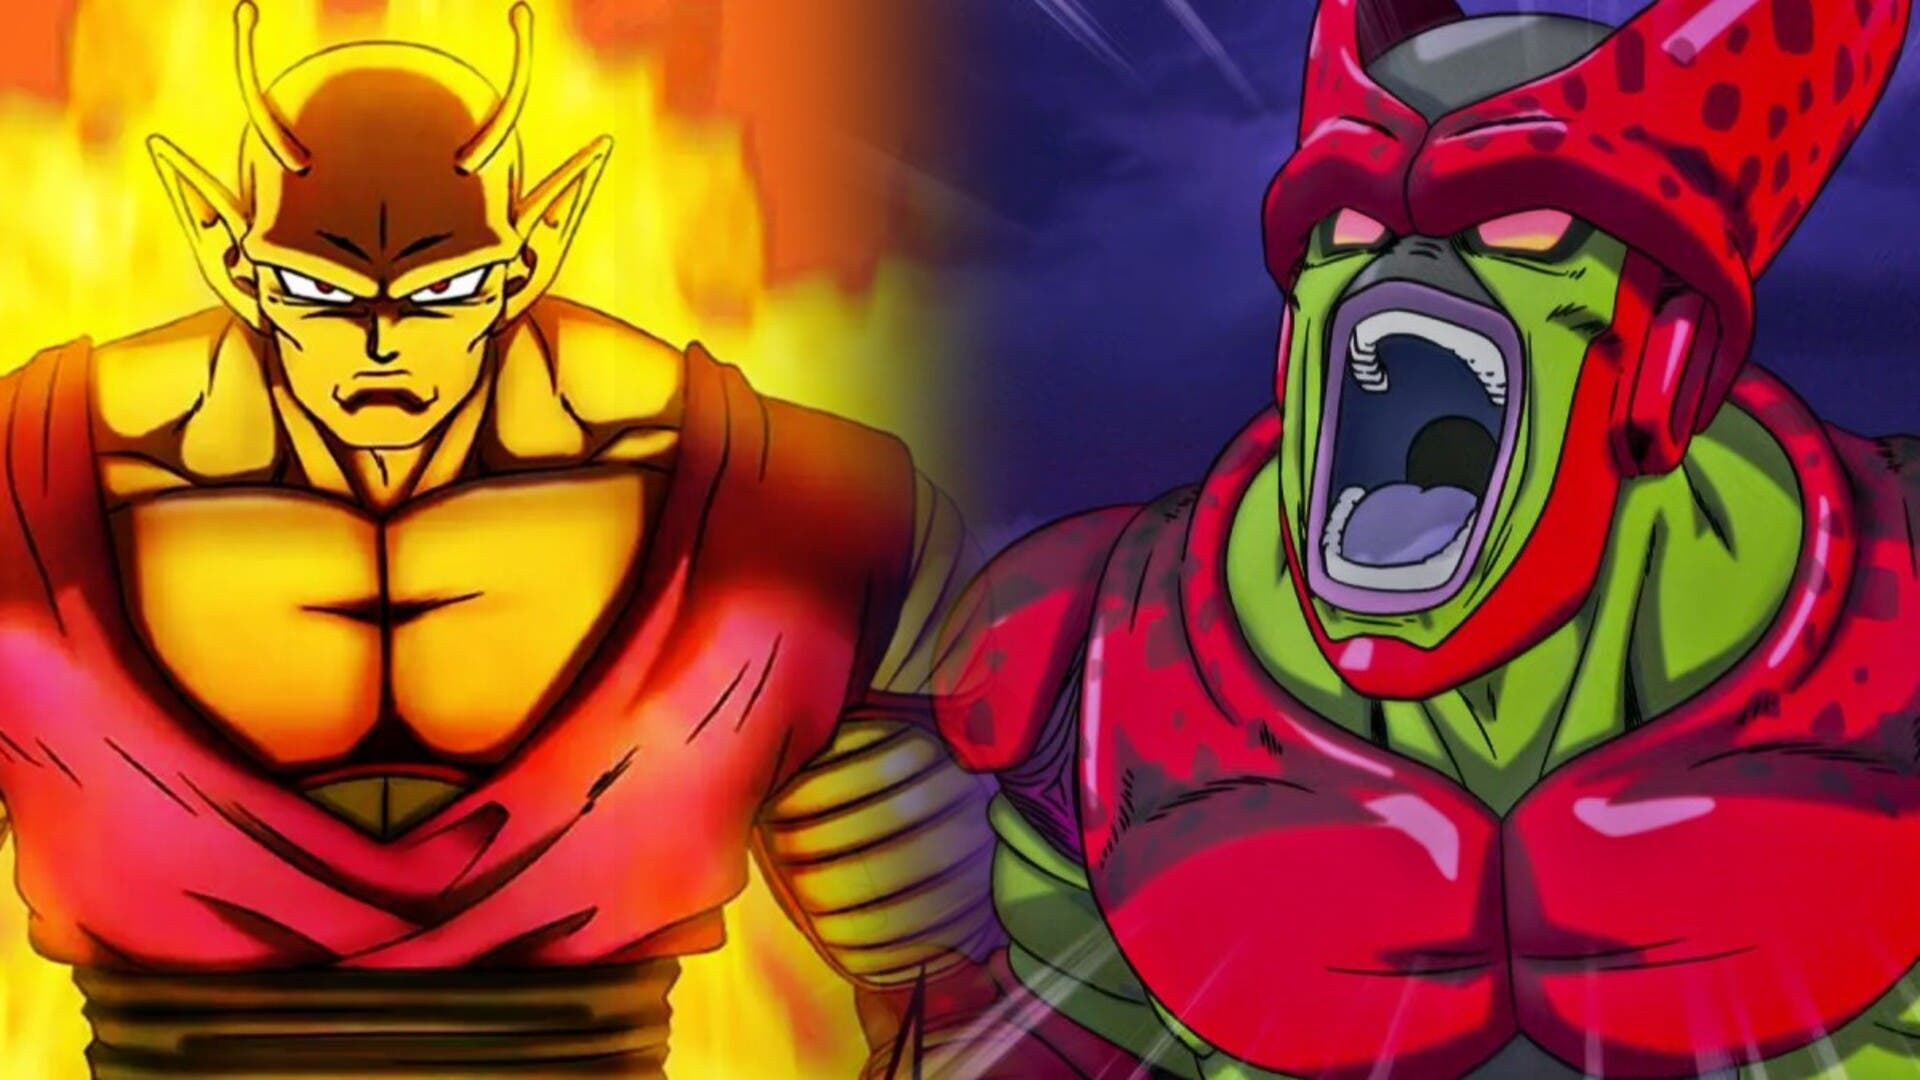 Dragon Ball Super MANGA 100 (ADELANTO): ¡NUEVO ARCO CONFIRMADO